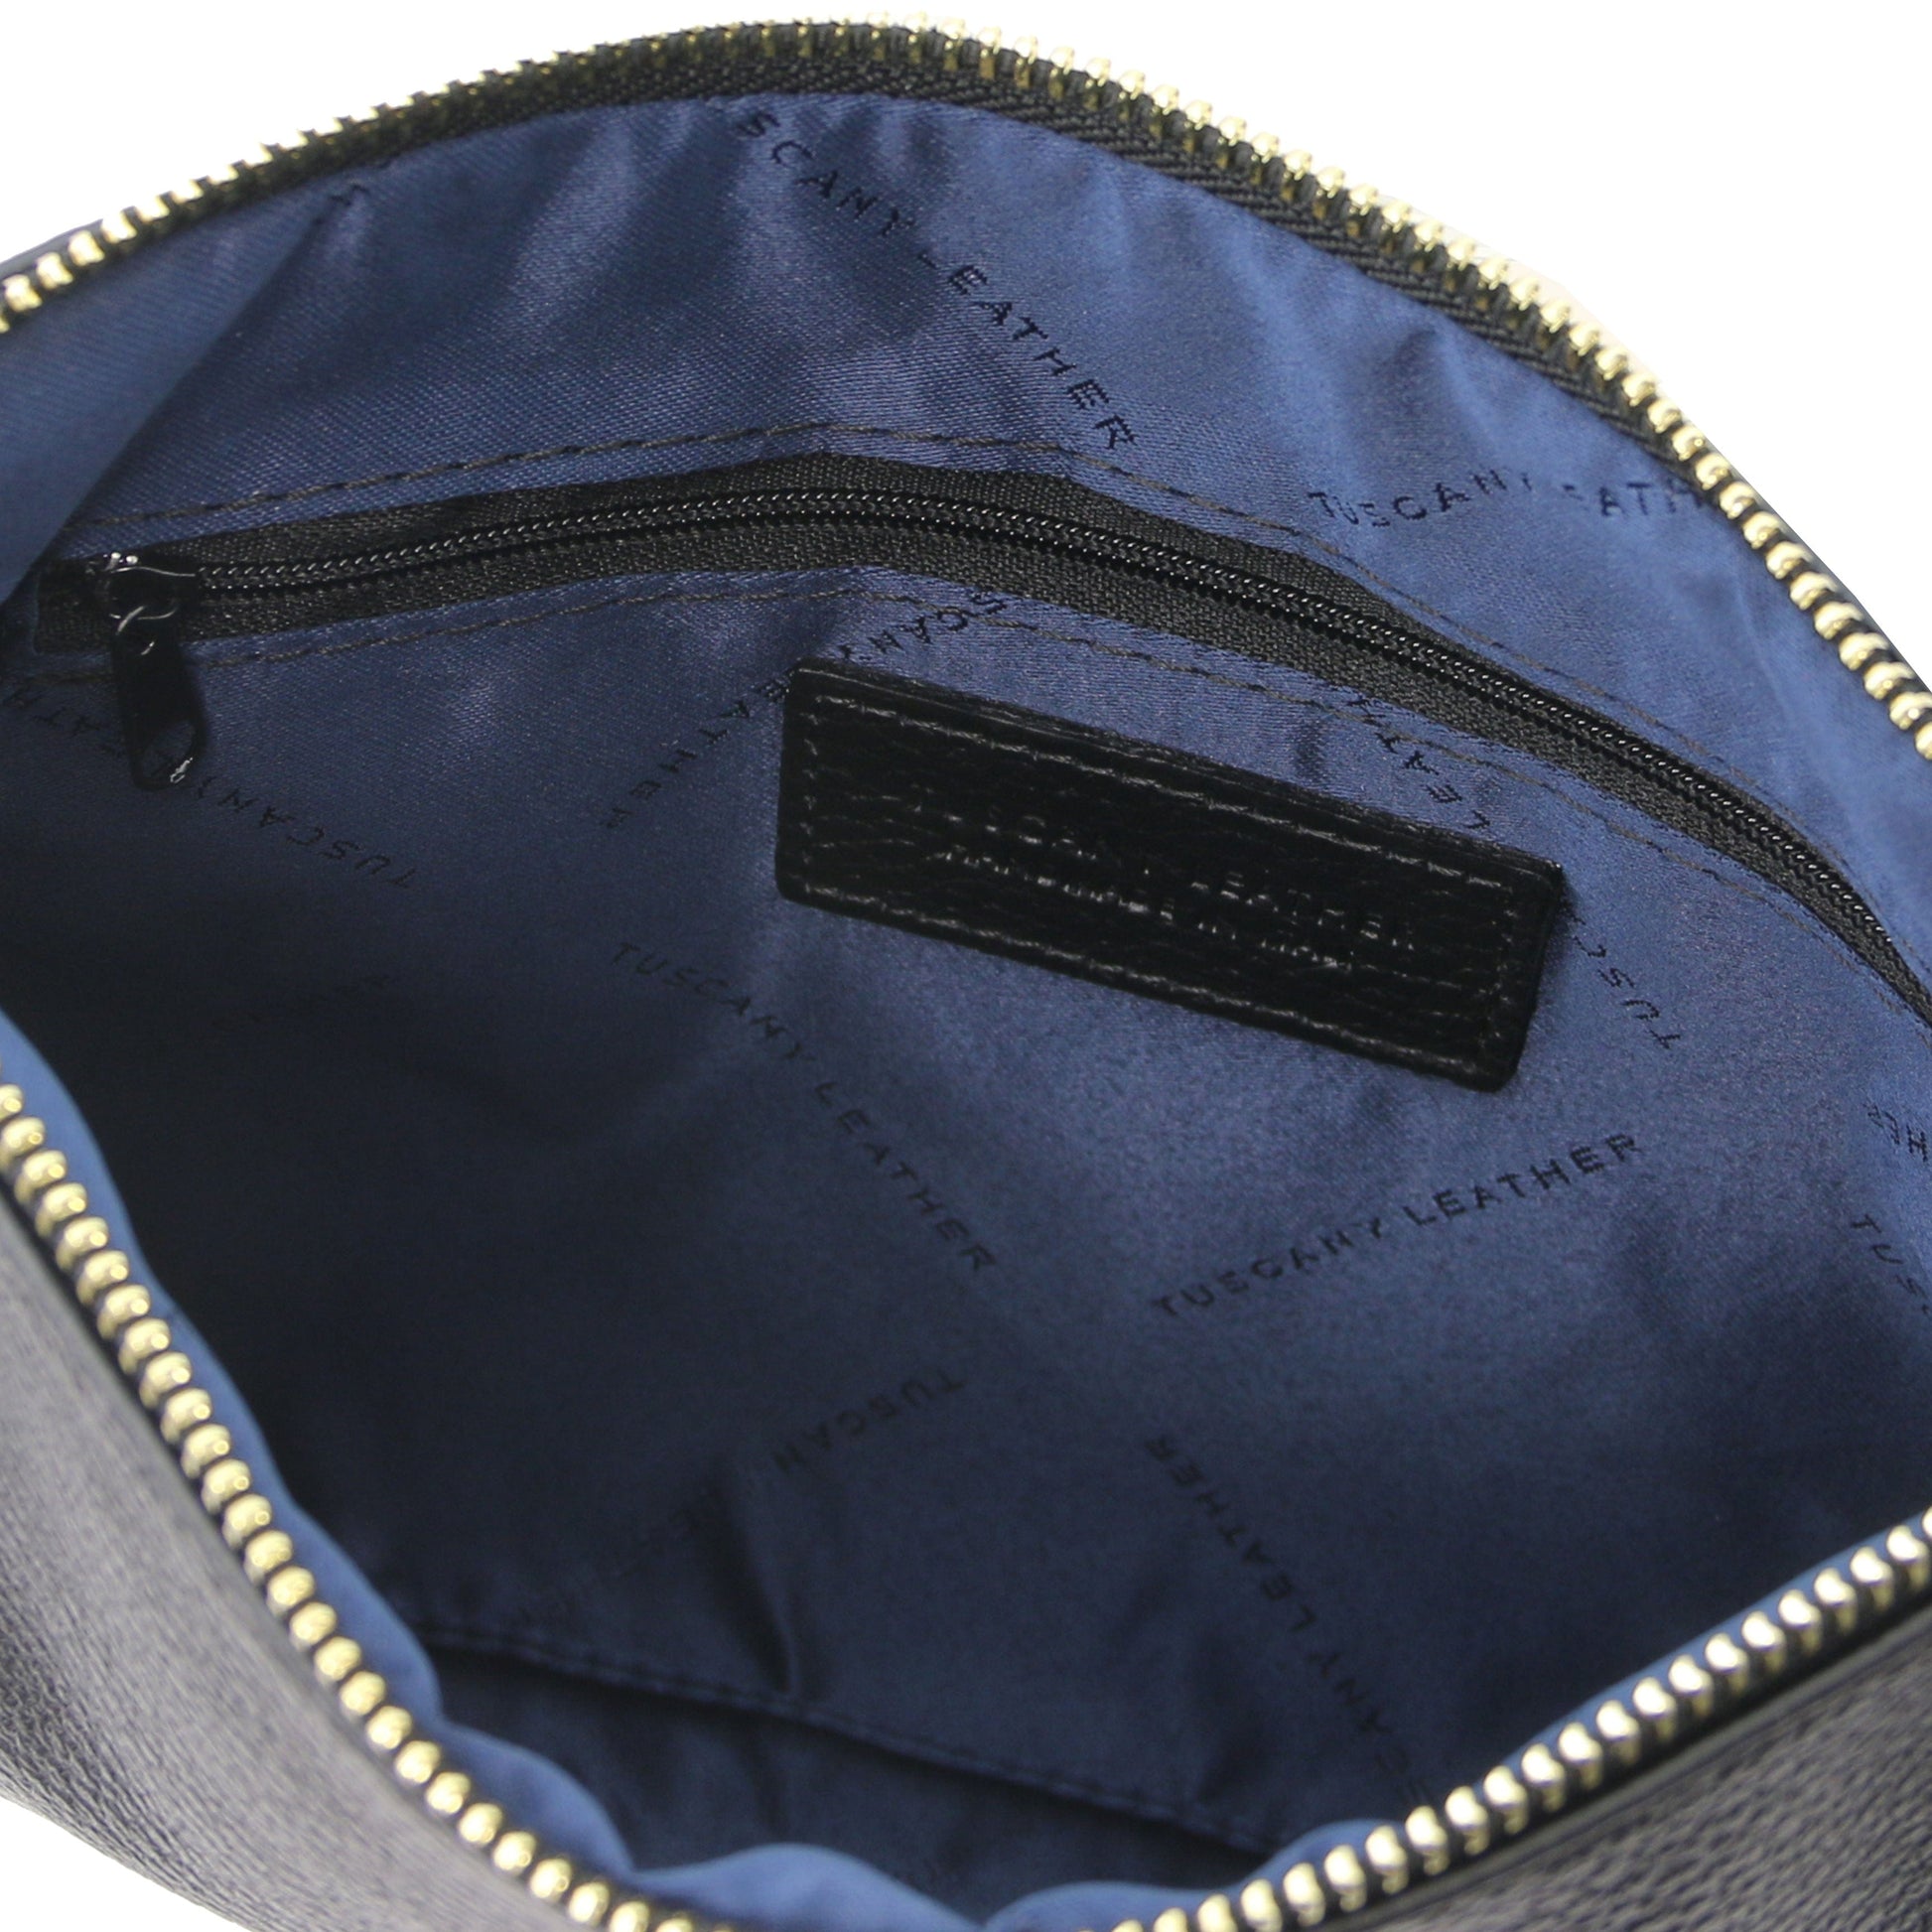 TL Bag - Soft leather clutch | TL142029 - Premium Leather handbags - Shop now at San Rocco Italia